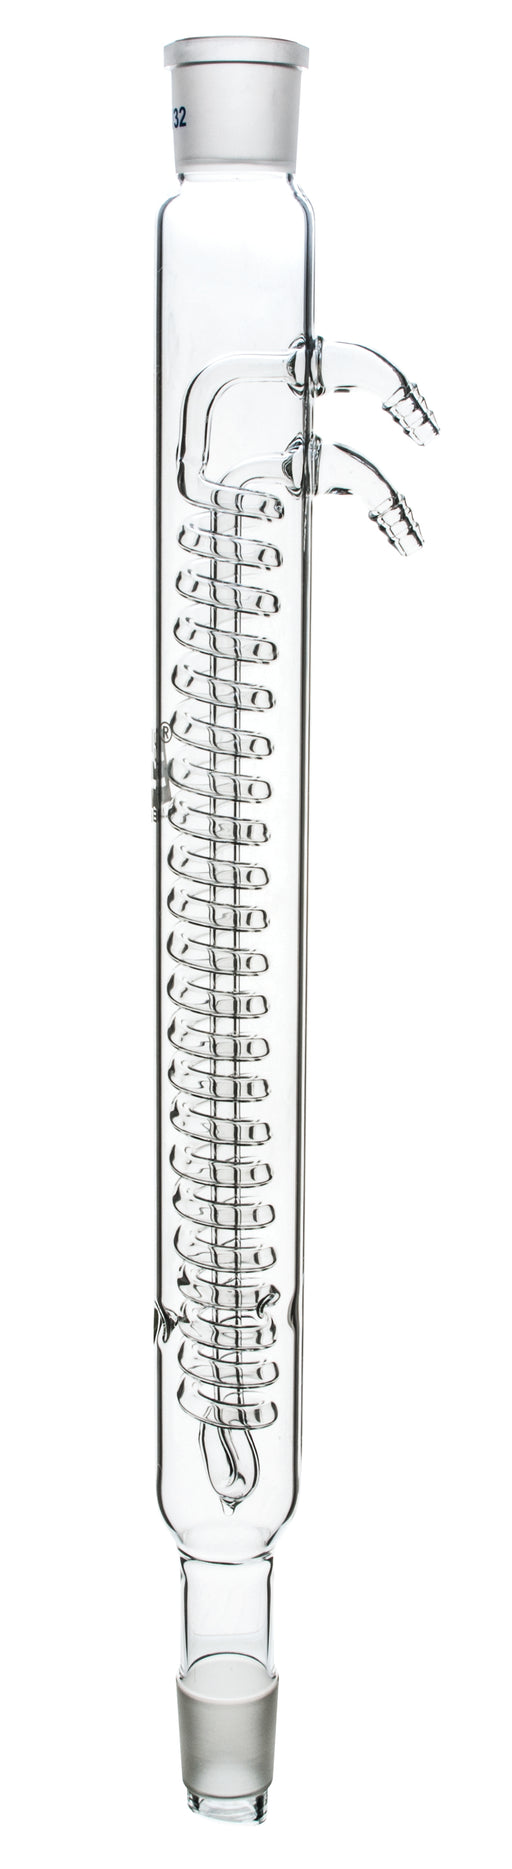 Condenser - Dimroth, Glass Connector